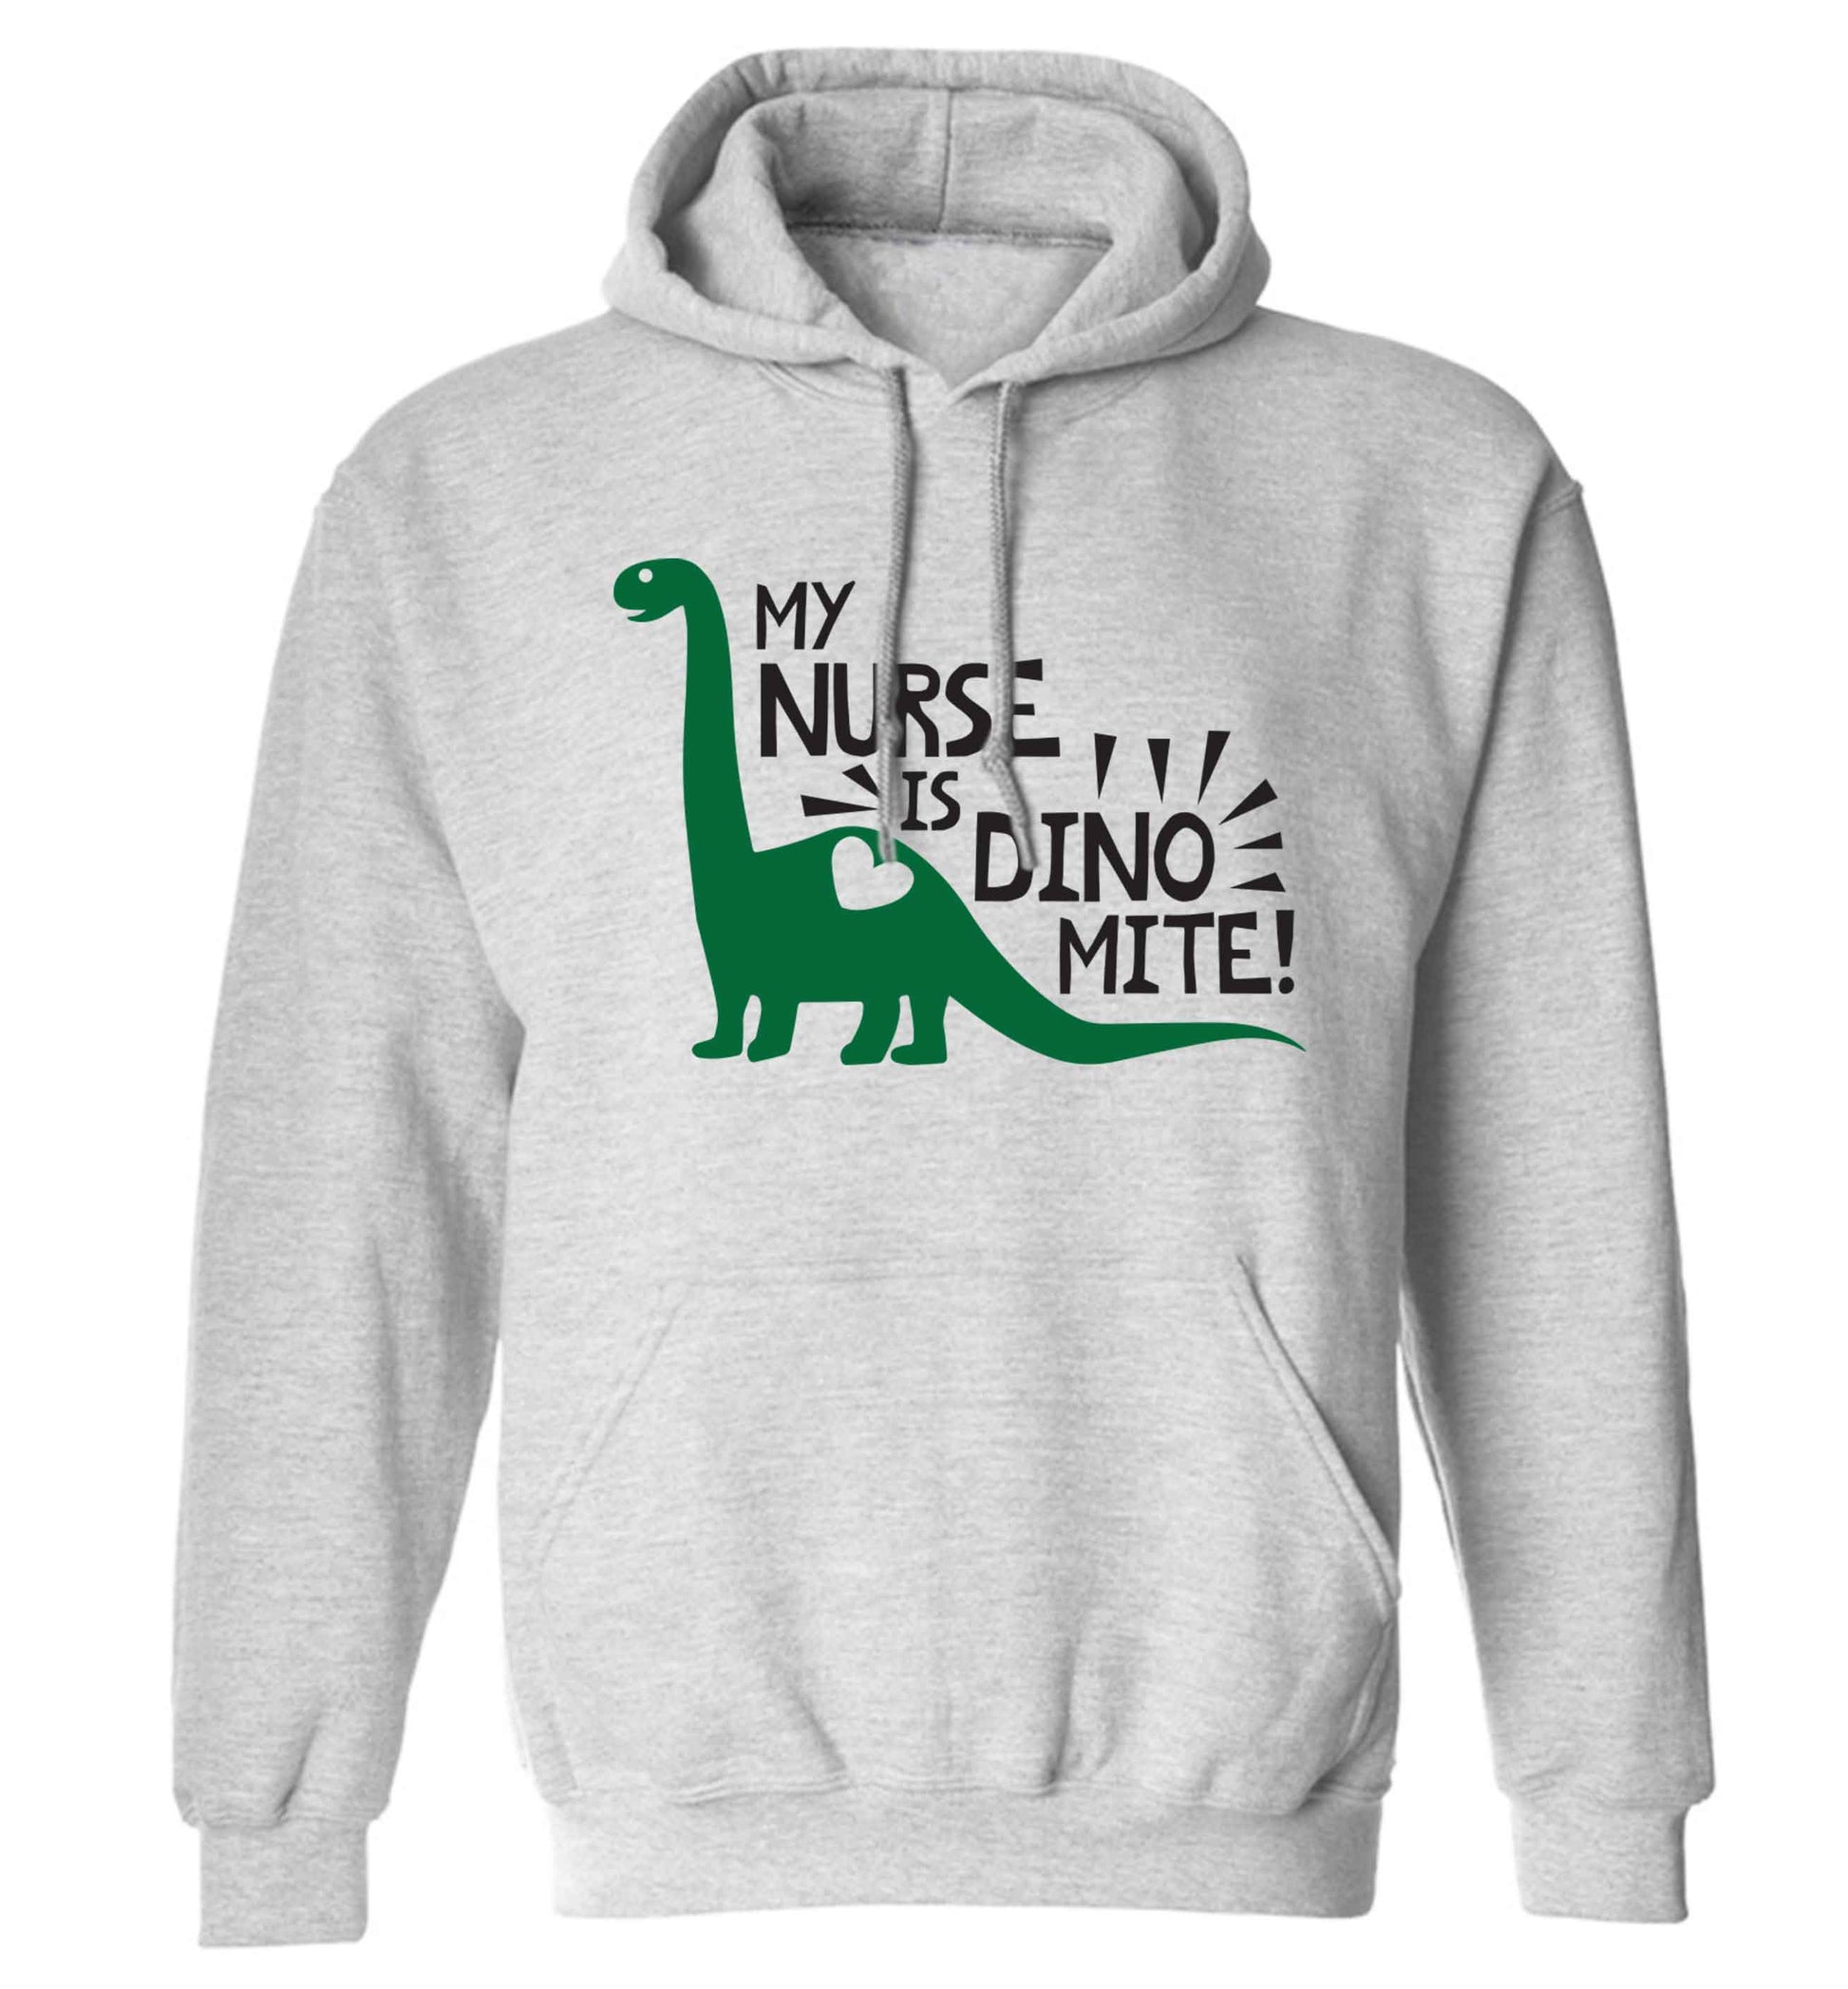 My nurse is dinomite! adults unisex grey hoodie 2XL